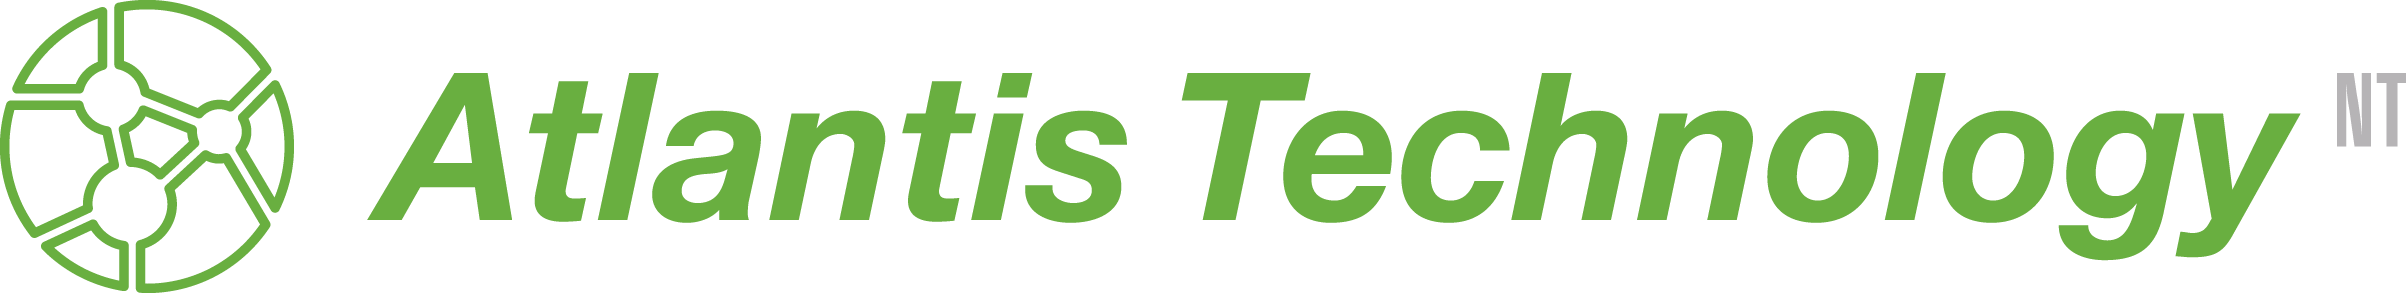 atlantis-logo-green